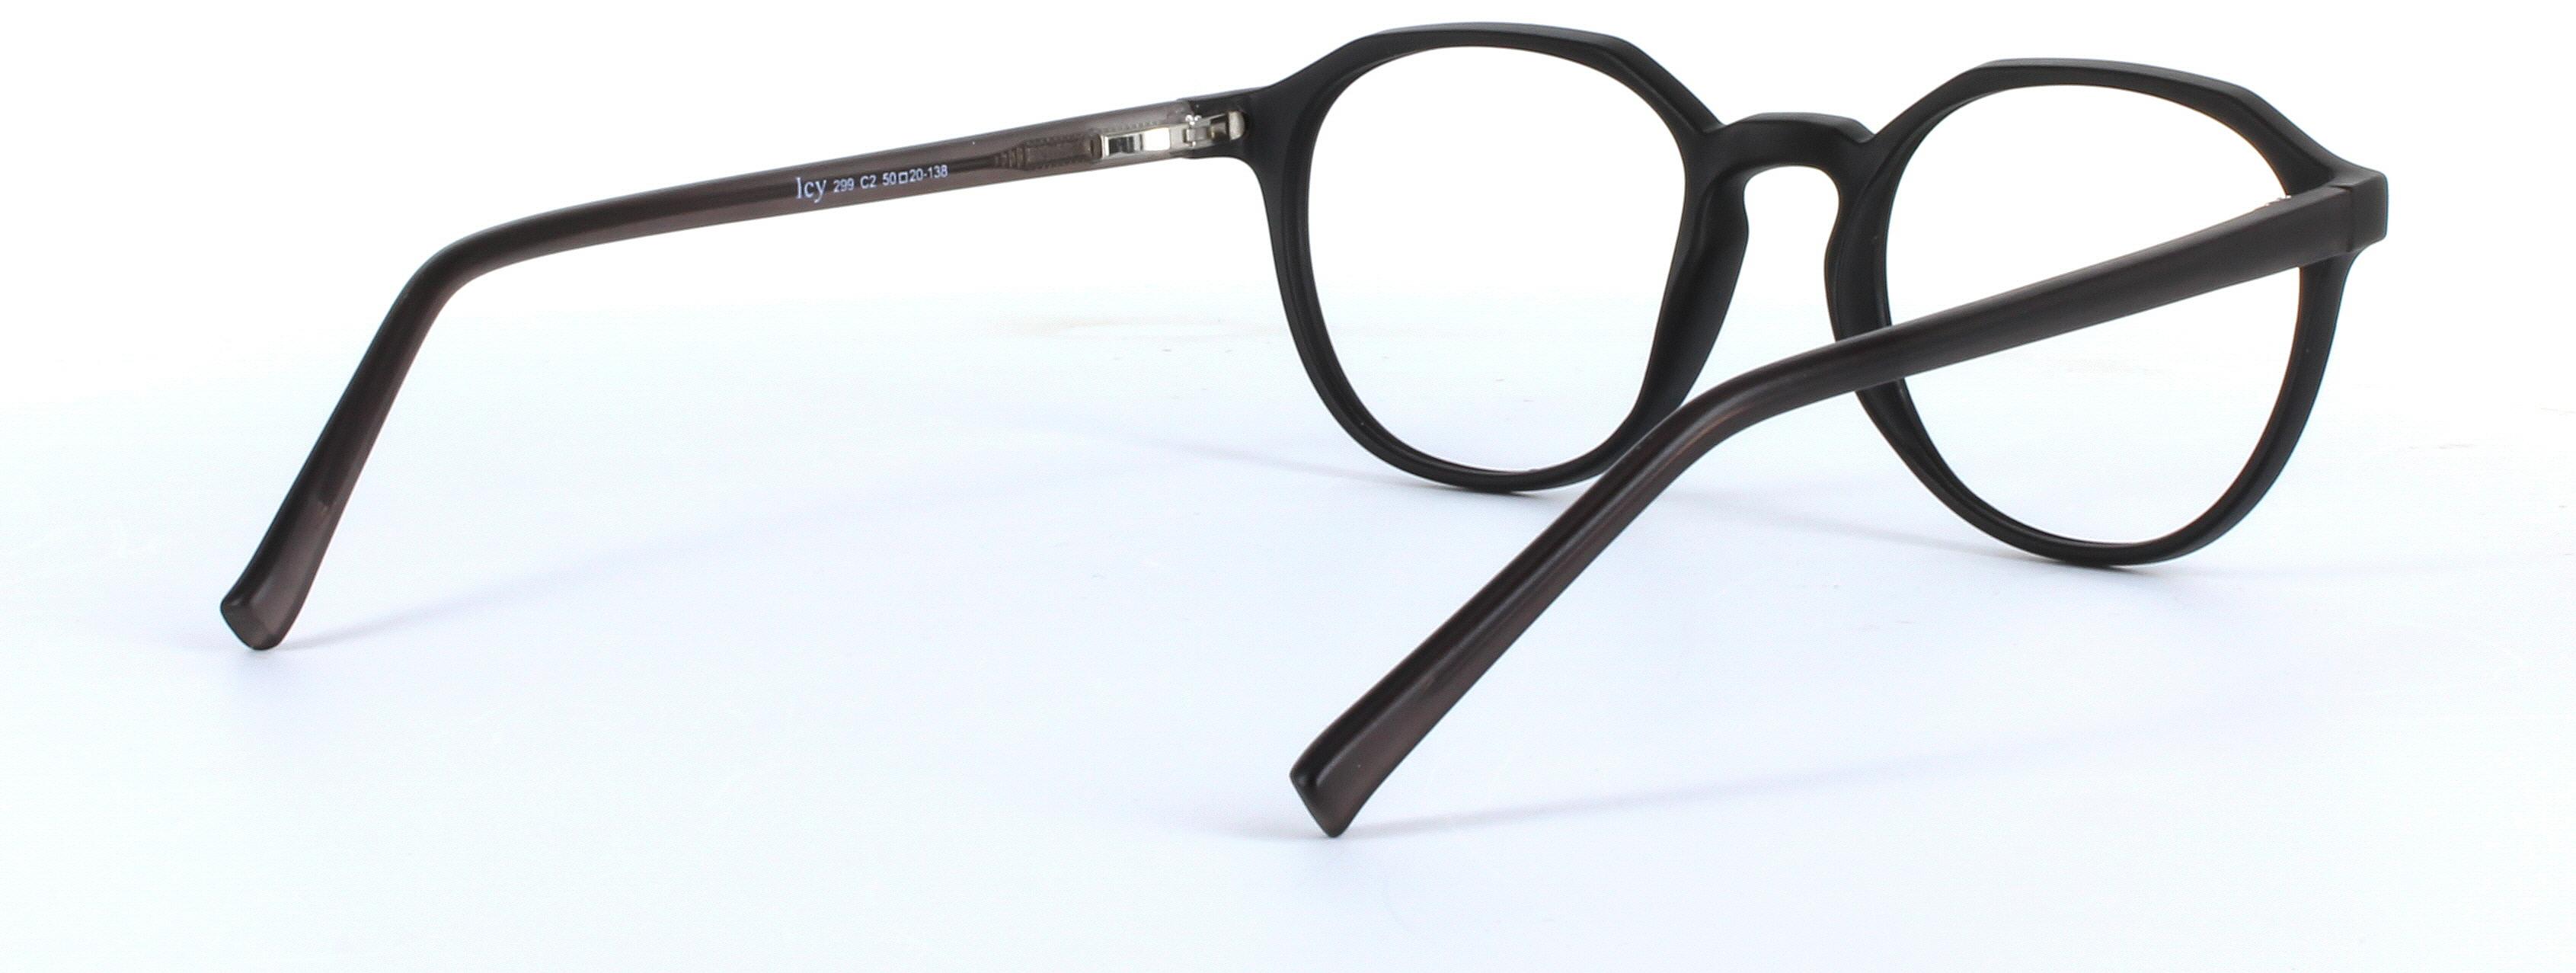 Jango Black Full Rim Round Plastic Glasses - Image View 4